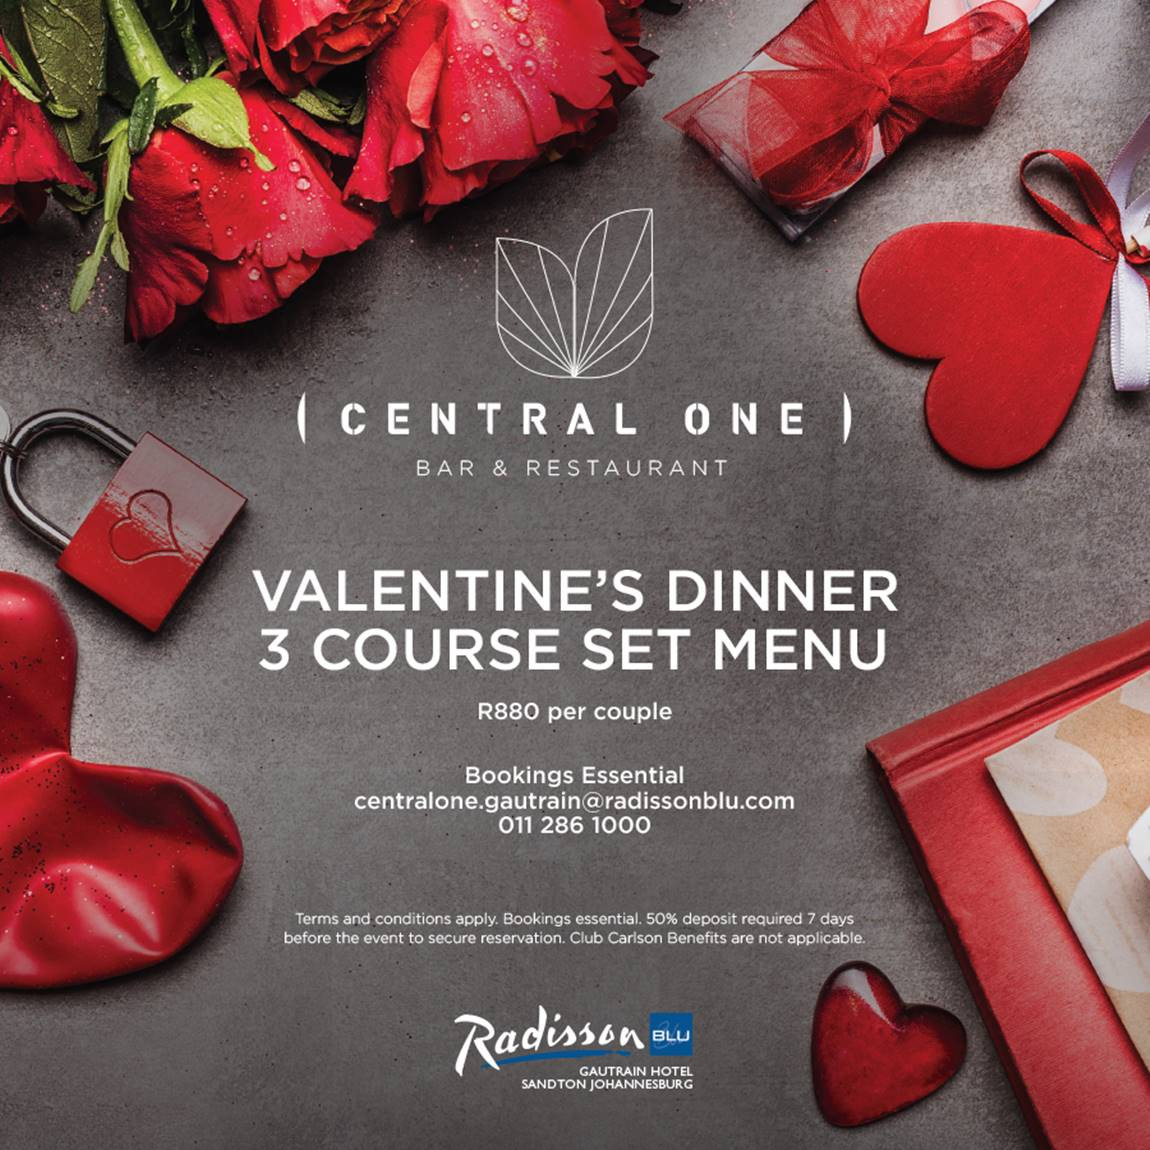 Valentines Day Dinner Specials
 Valentines Day Dinner at Central e Restaurant